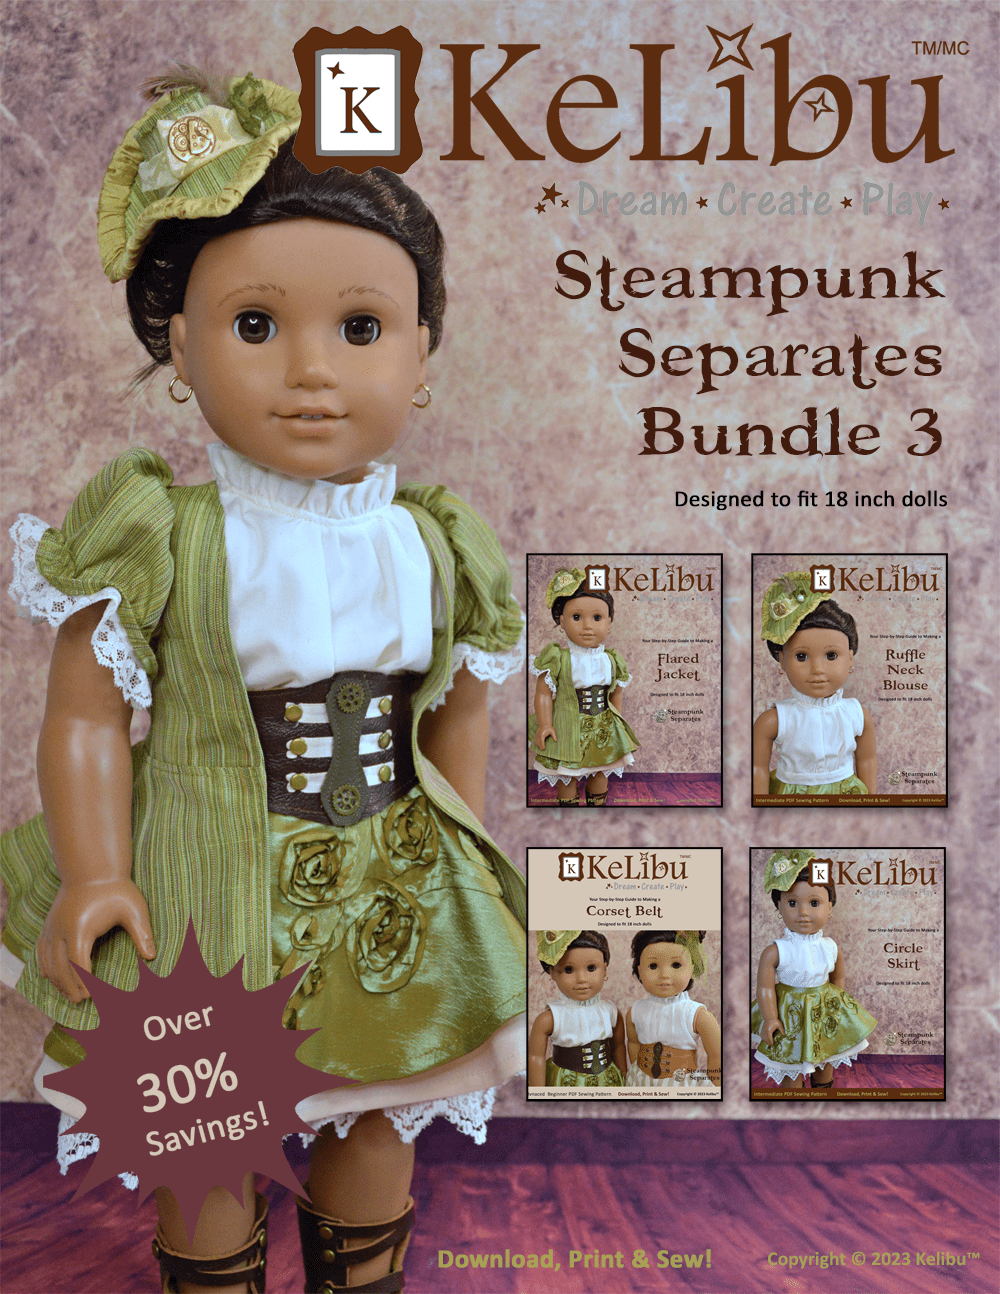 Steampunk Separates 3 Bundle for 18 inch dolls